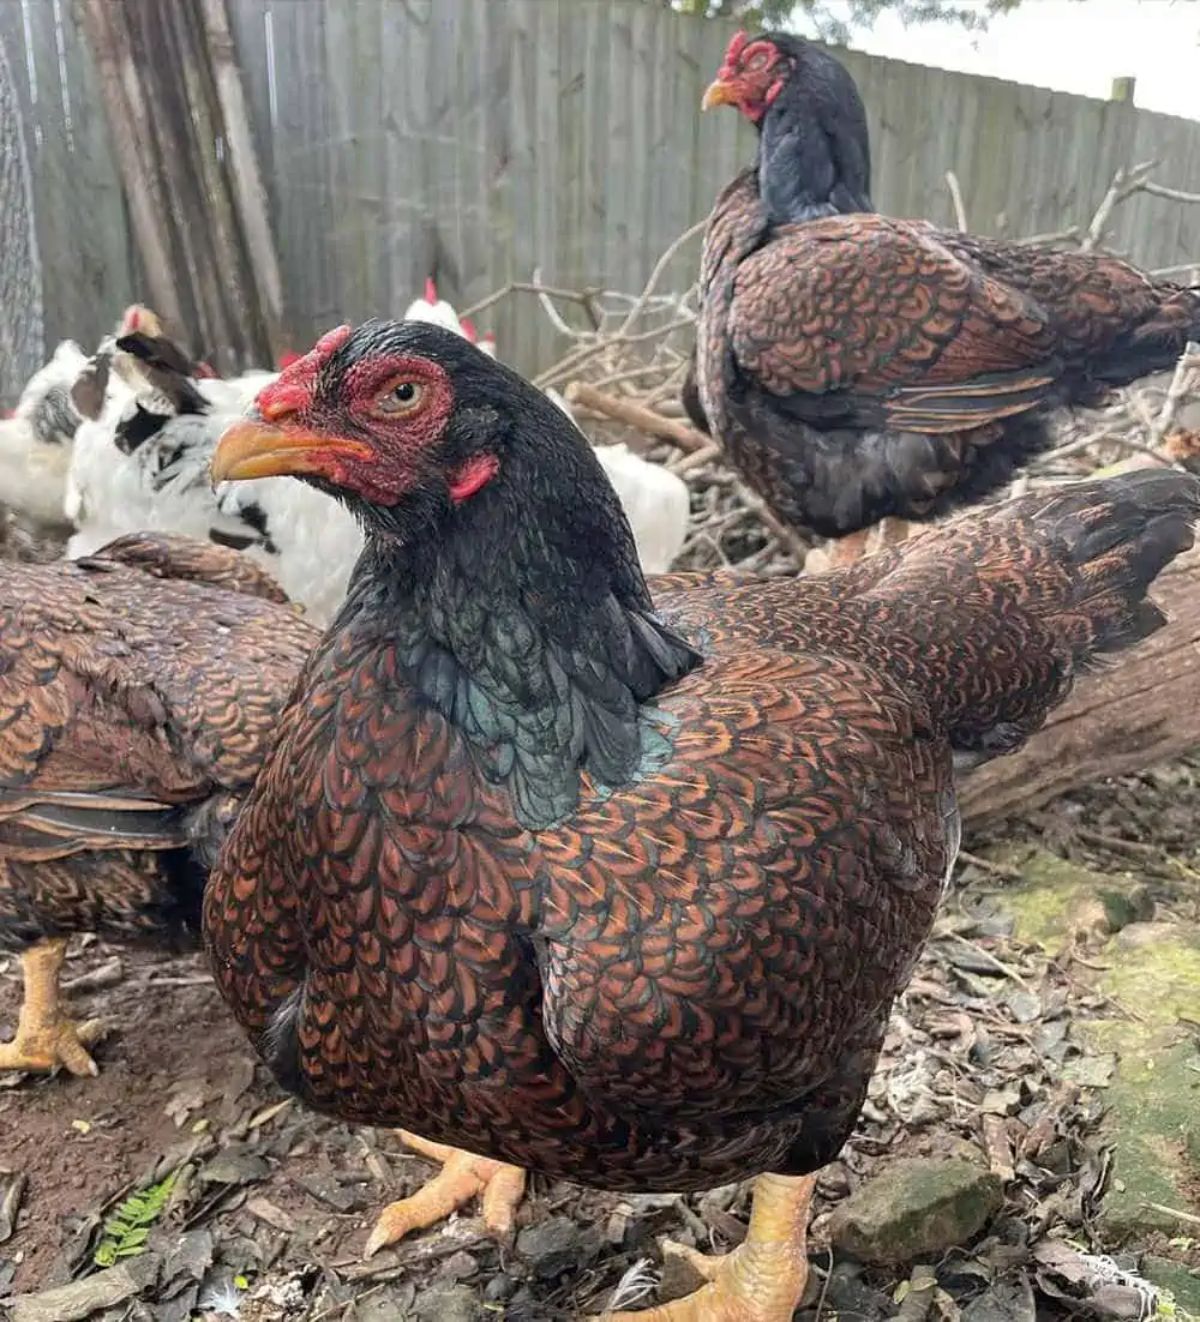 A Cornish Chicken flock in a backyard.